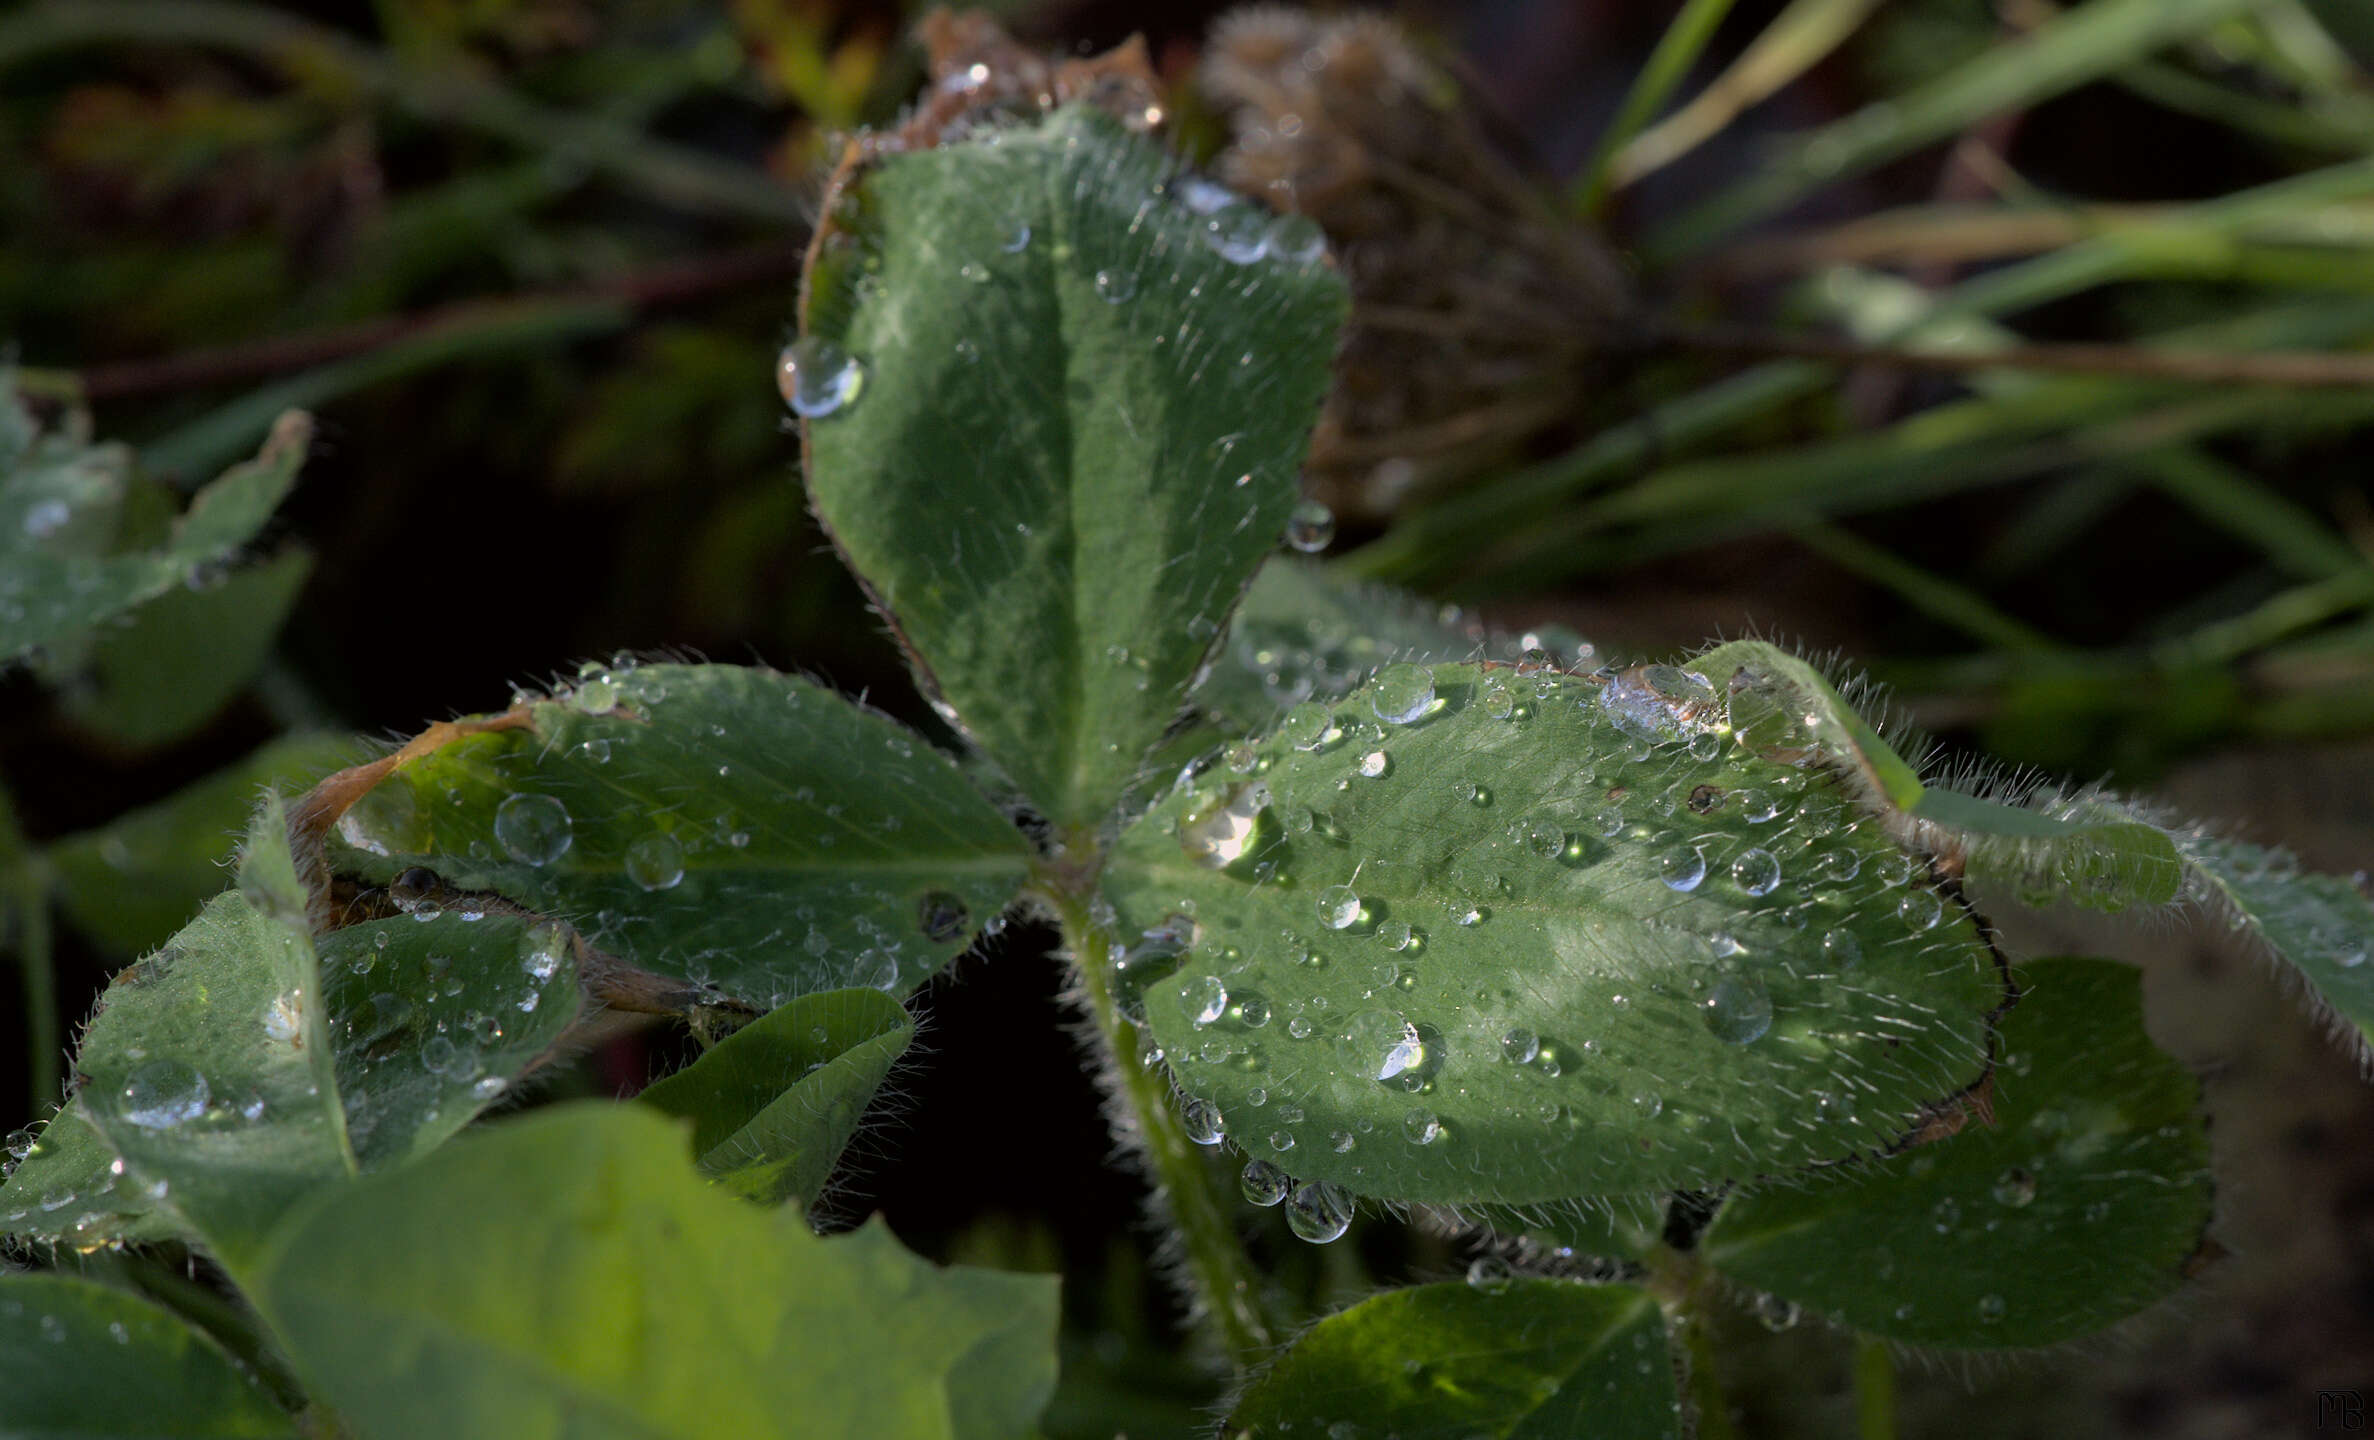 Water droplets on fuzzy leaf